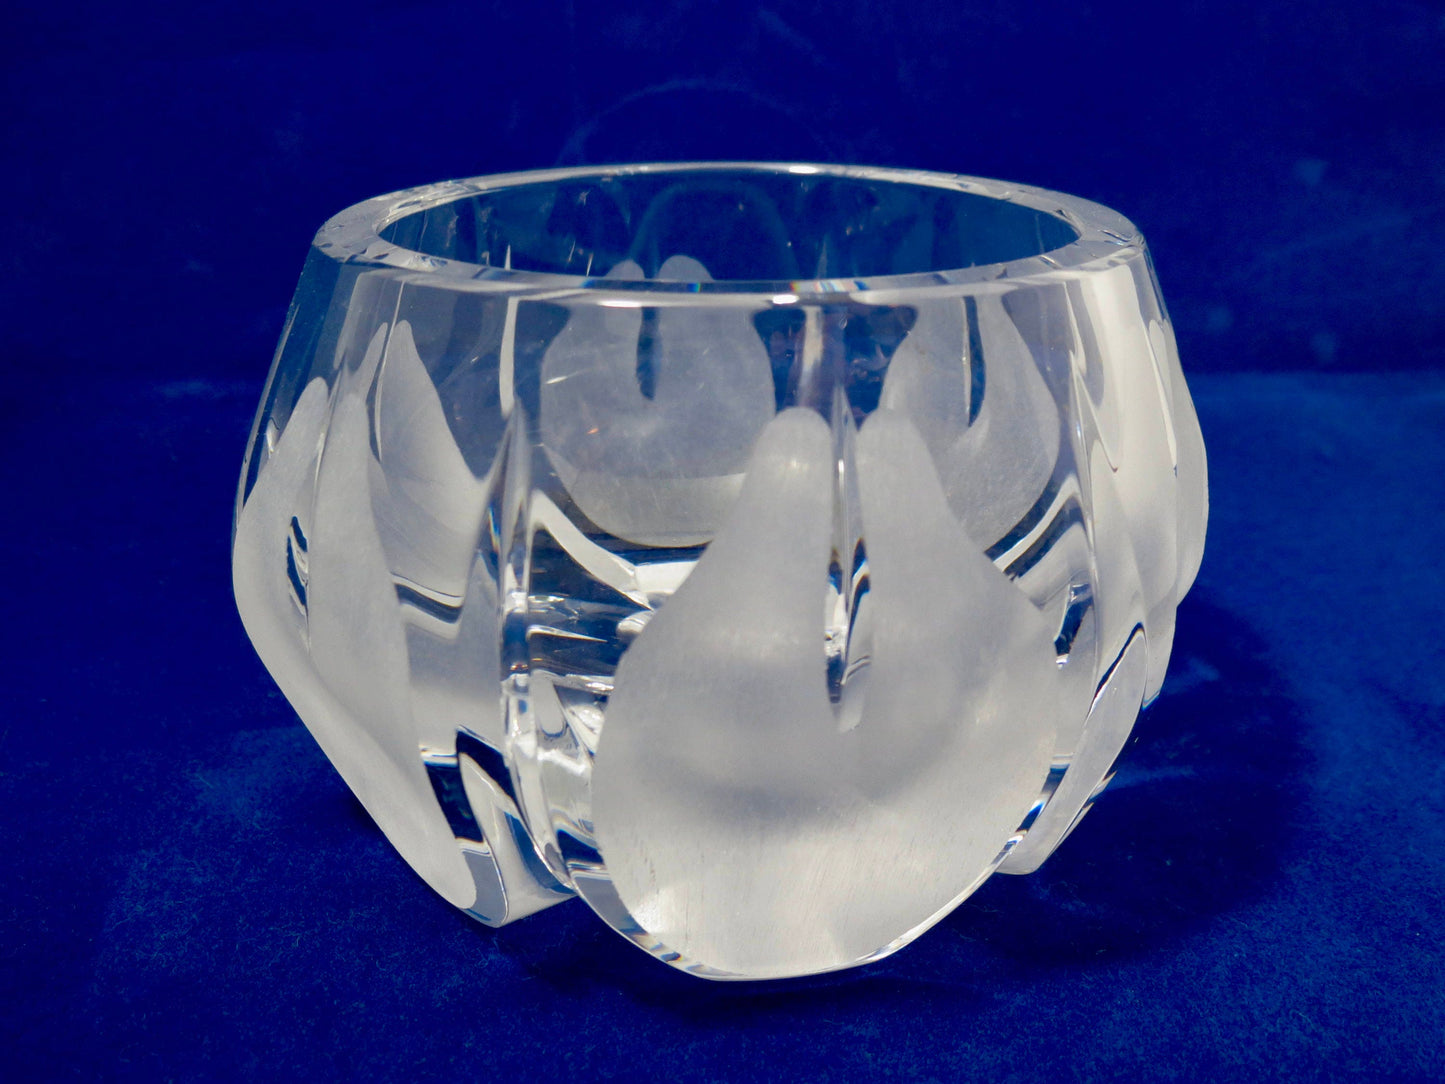 Vintage Etched Crystal Bowl - Art Nouveau Design, Clear Cut Petite Bowl, Heavy Clear Decorative Collectible - Duckwells